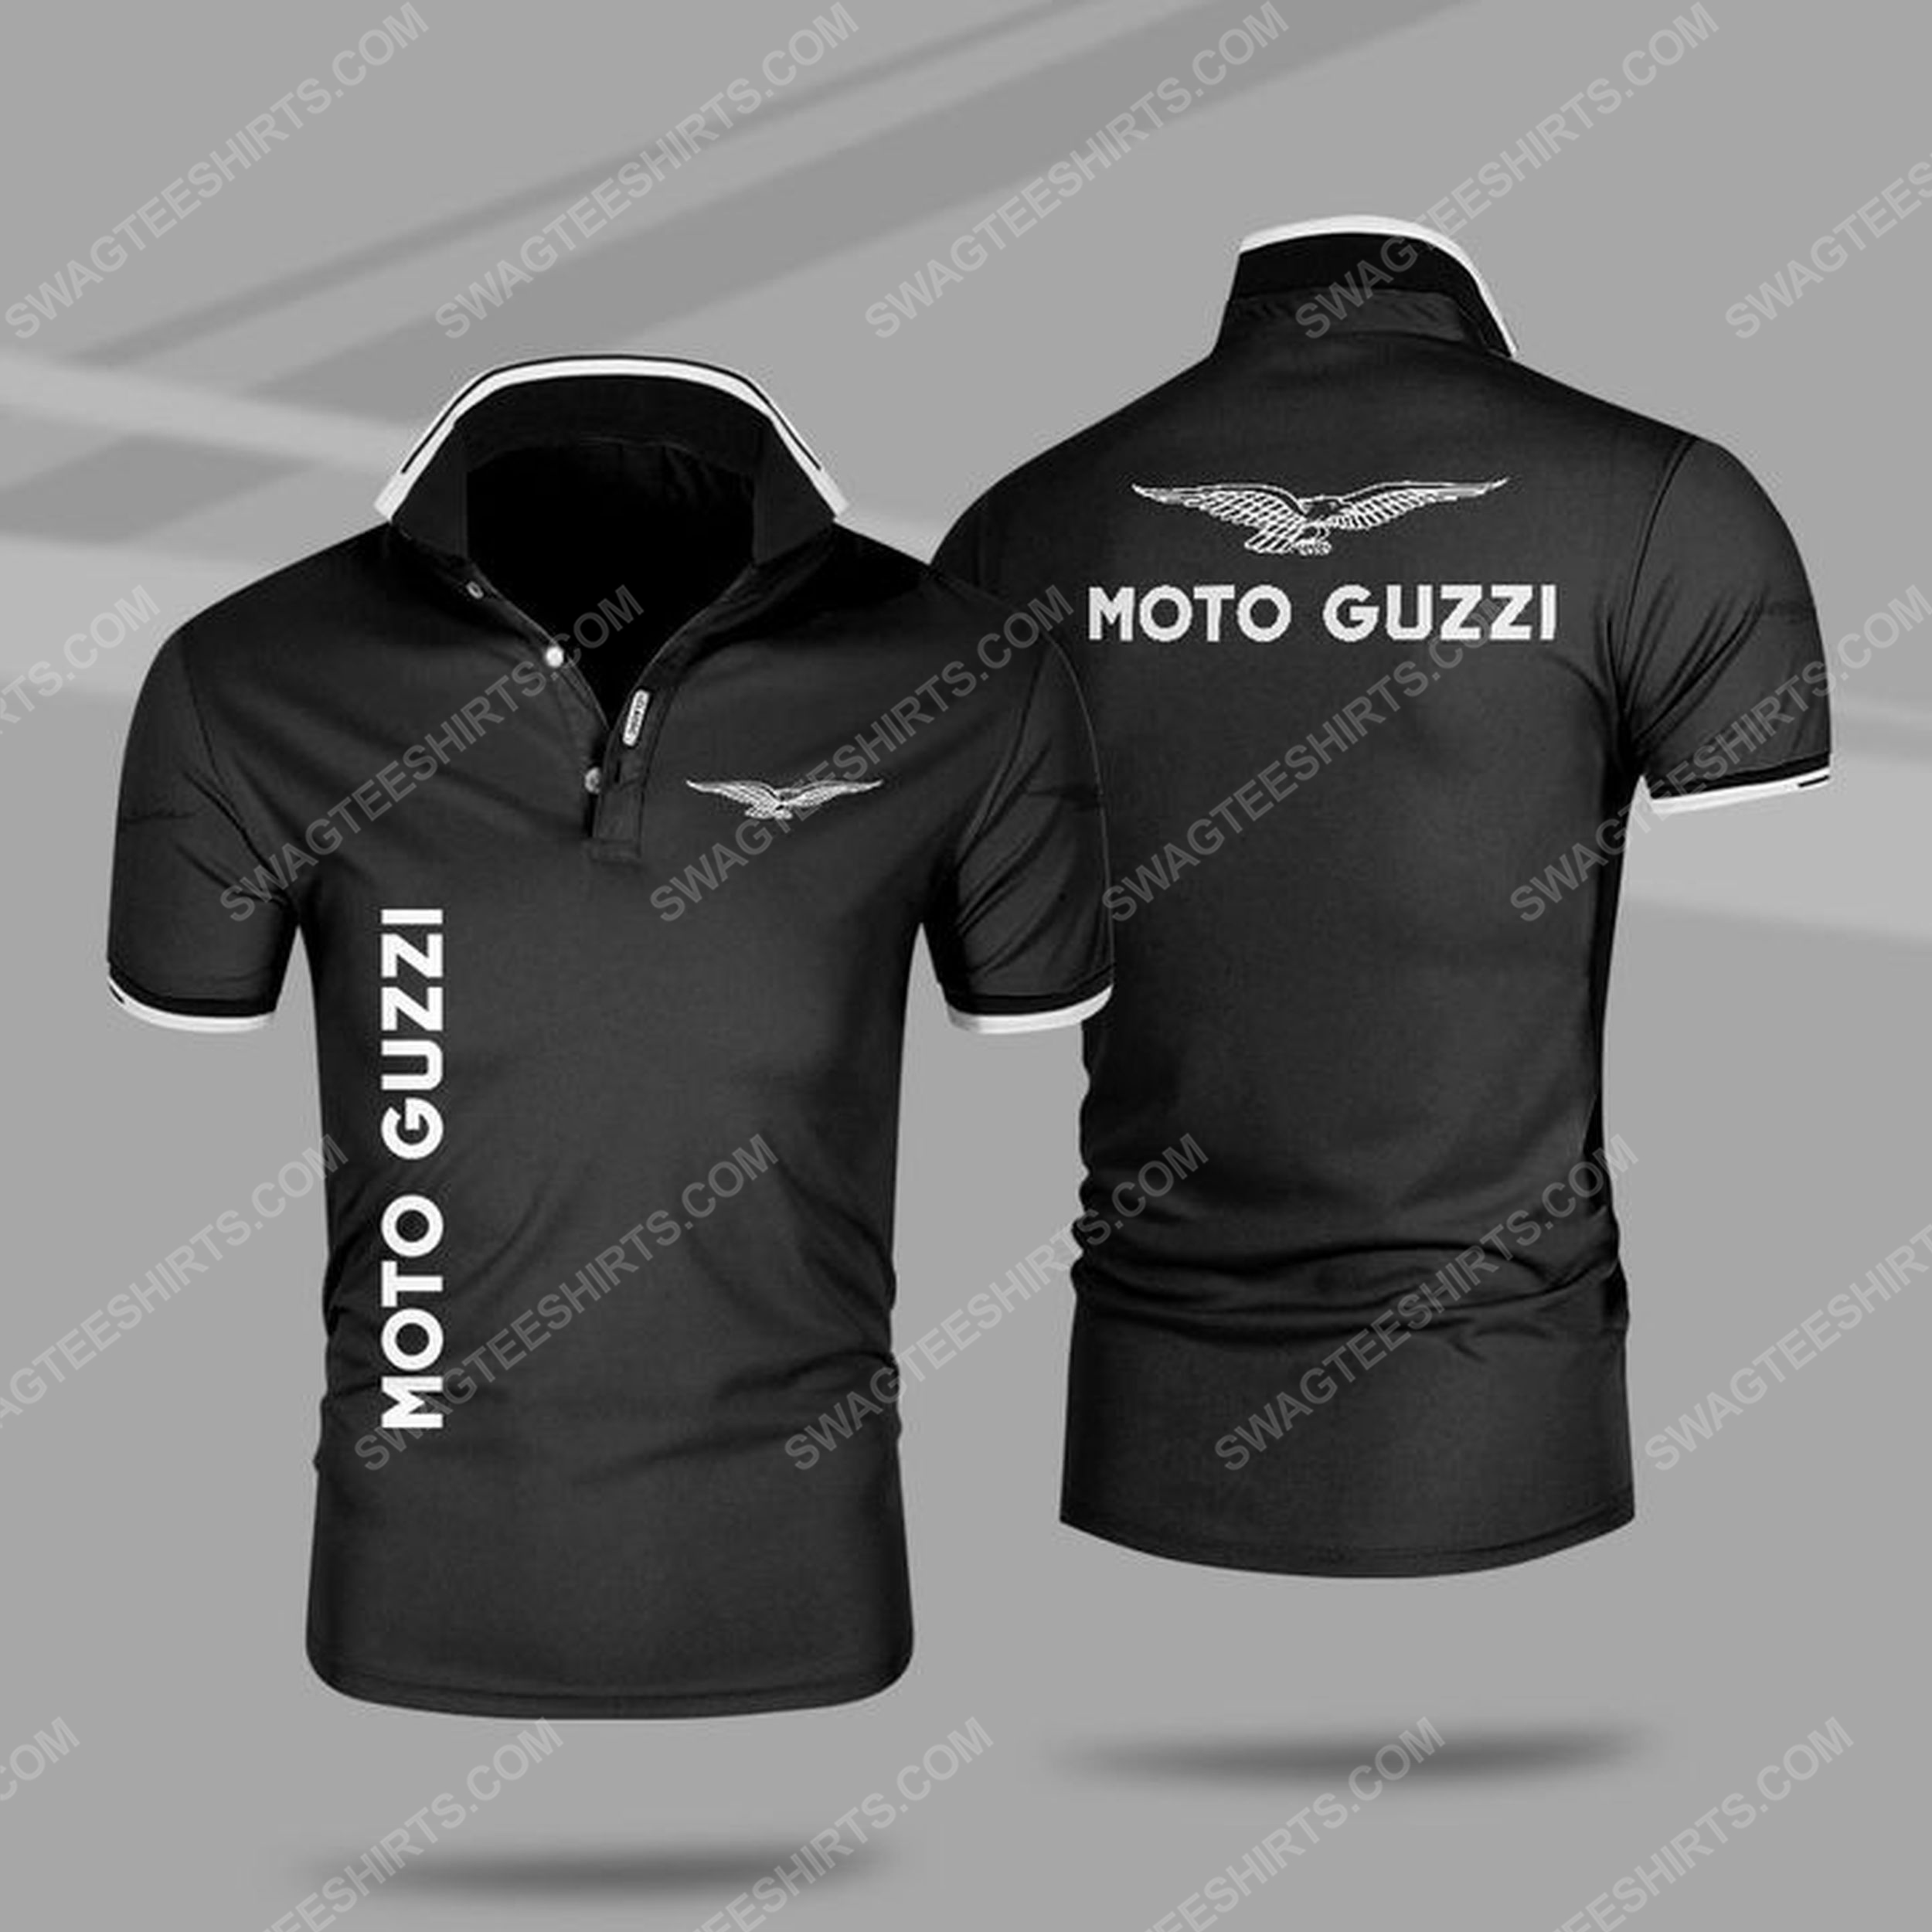 Moto guzzi italian motorcycles all over print polo shirt - black 1